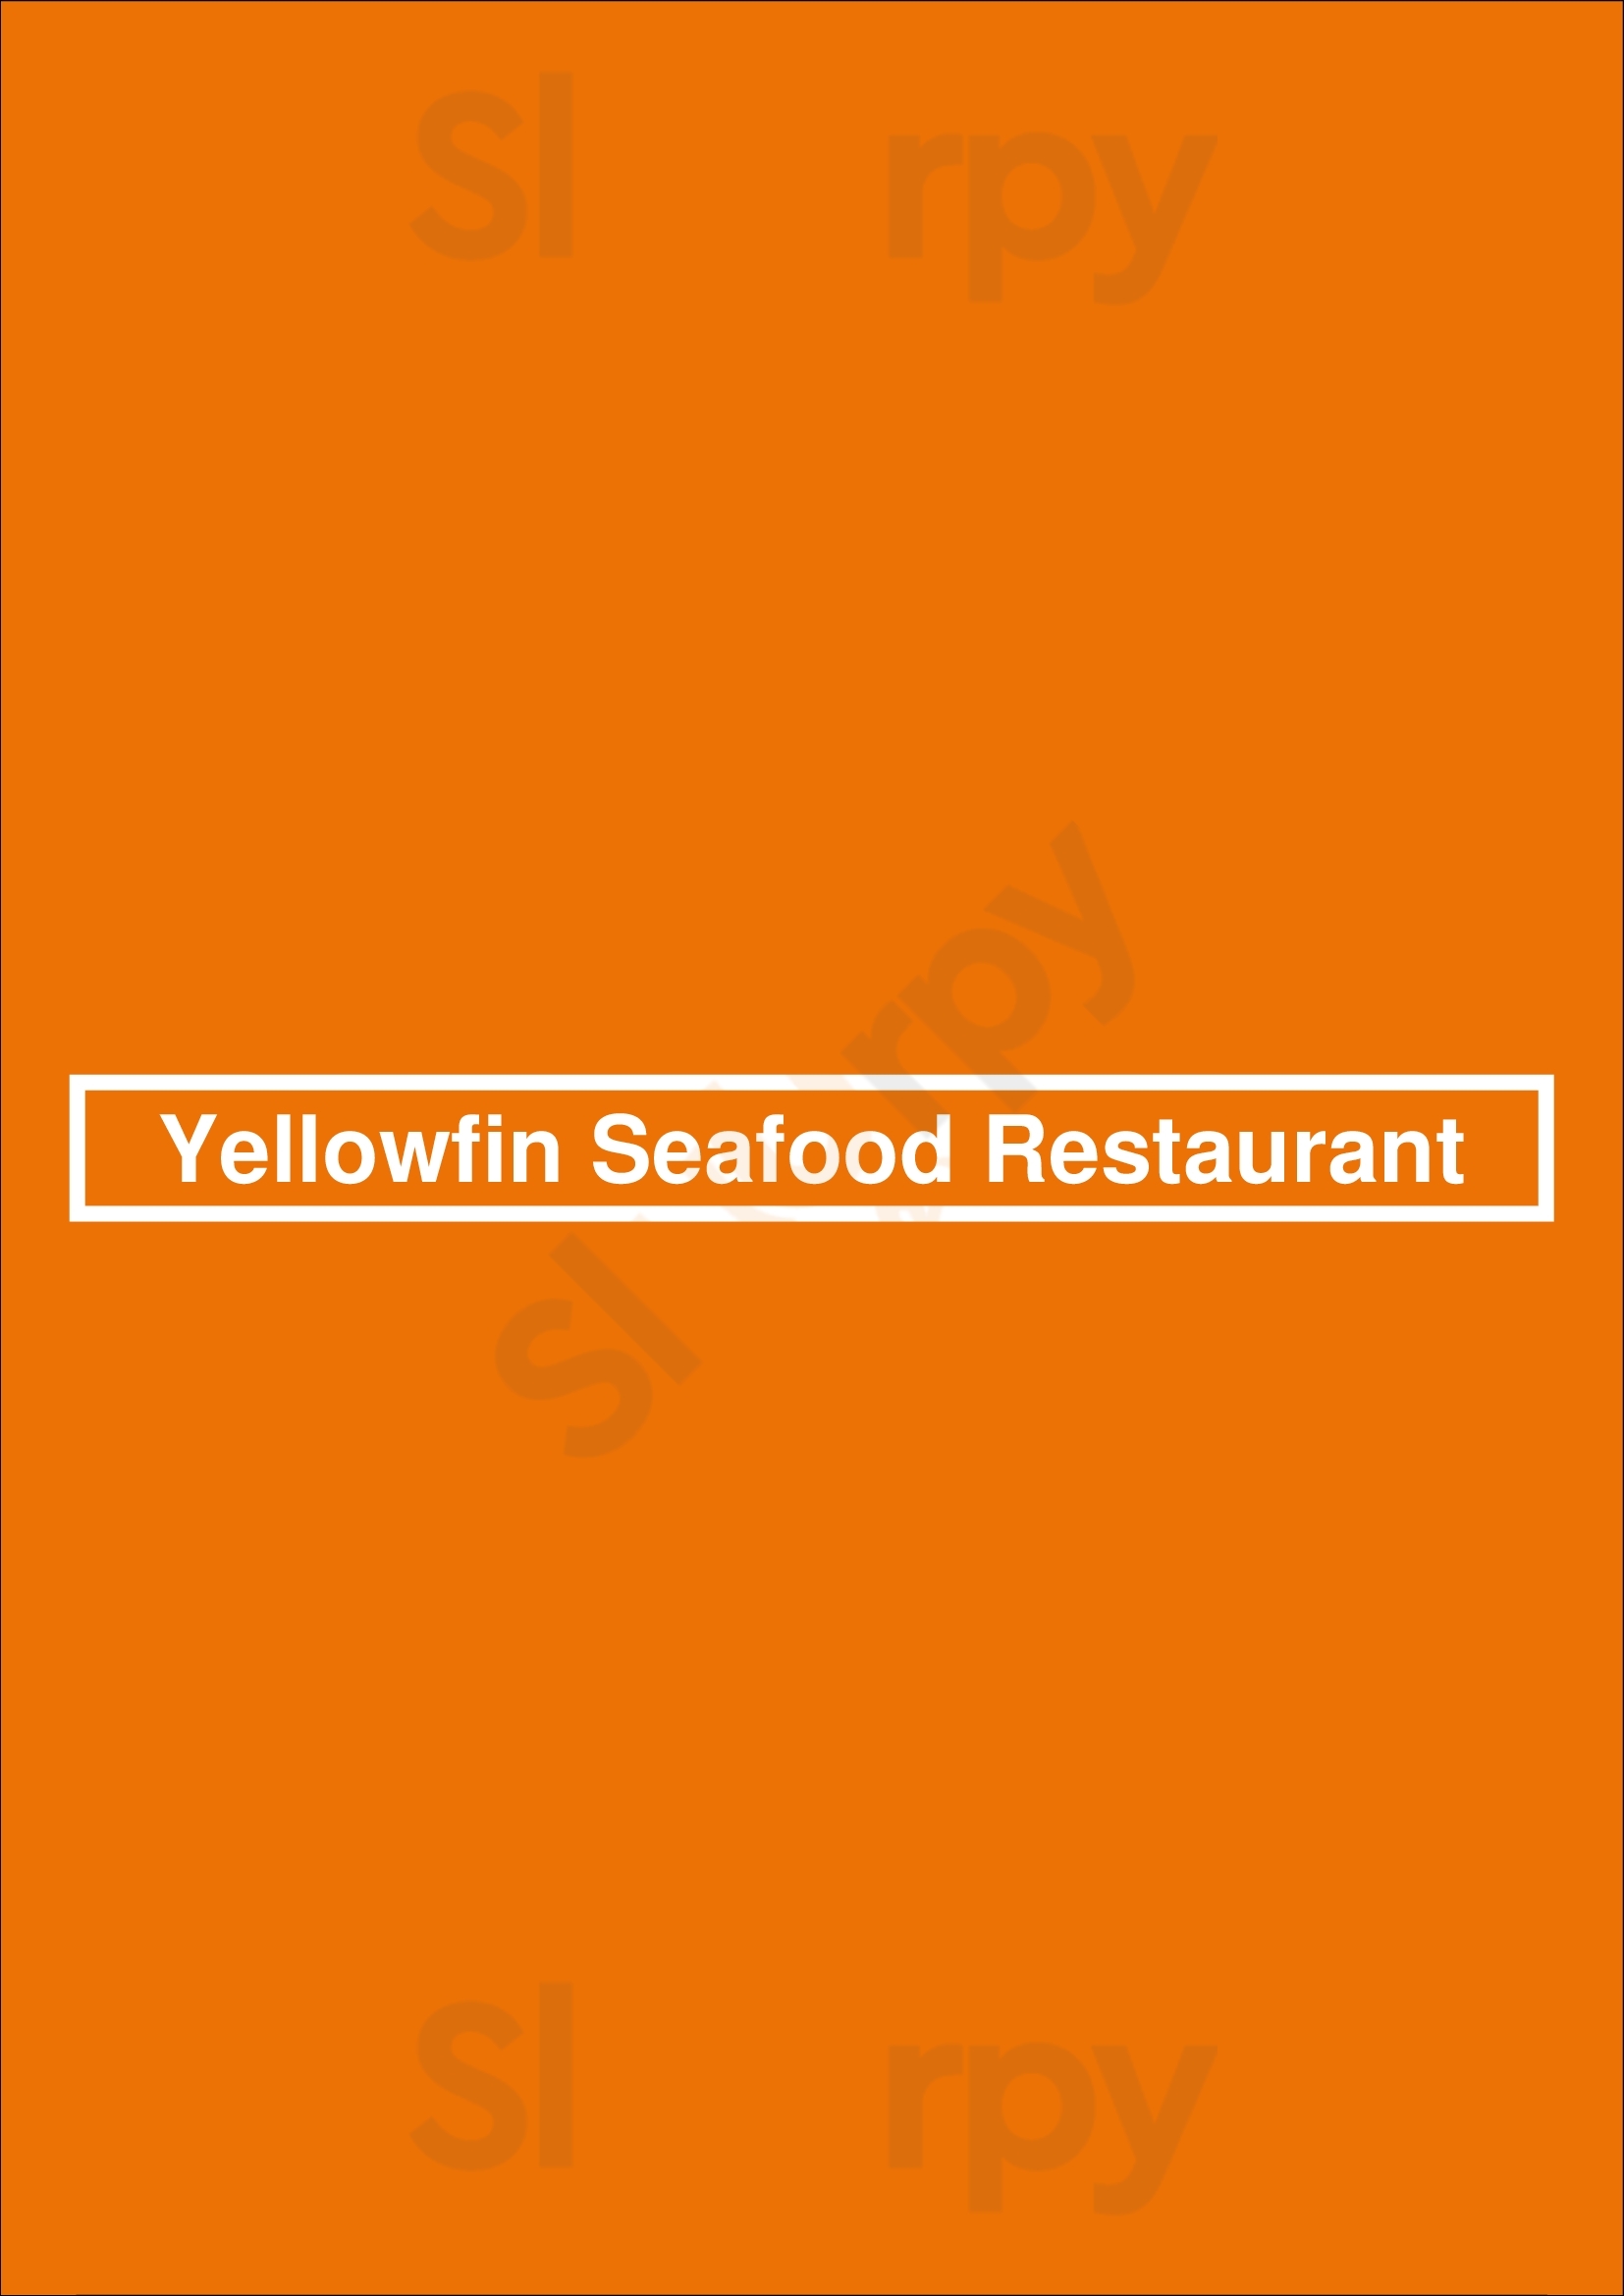 Yellowfin Seafood Restaurant Broadbeach Menu - 1